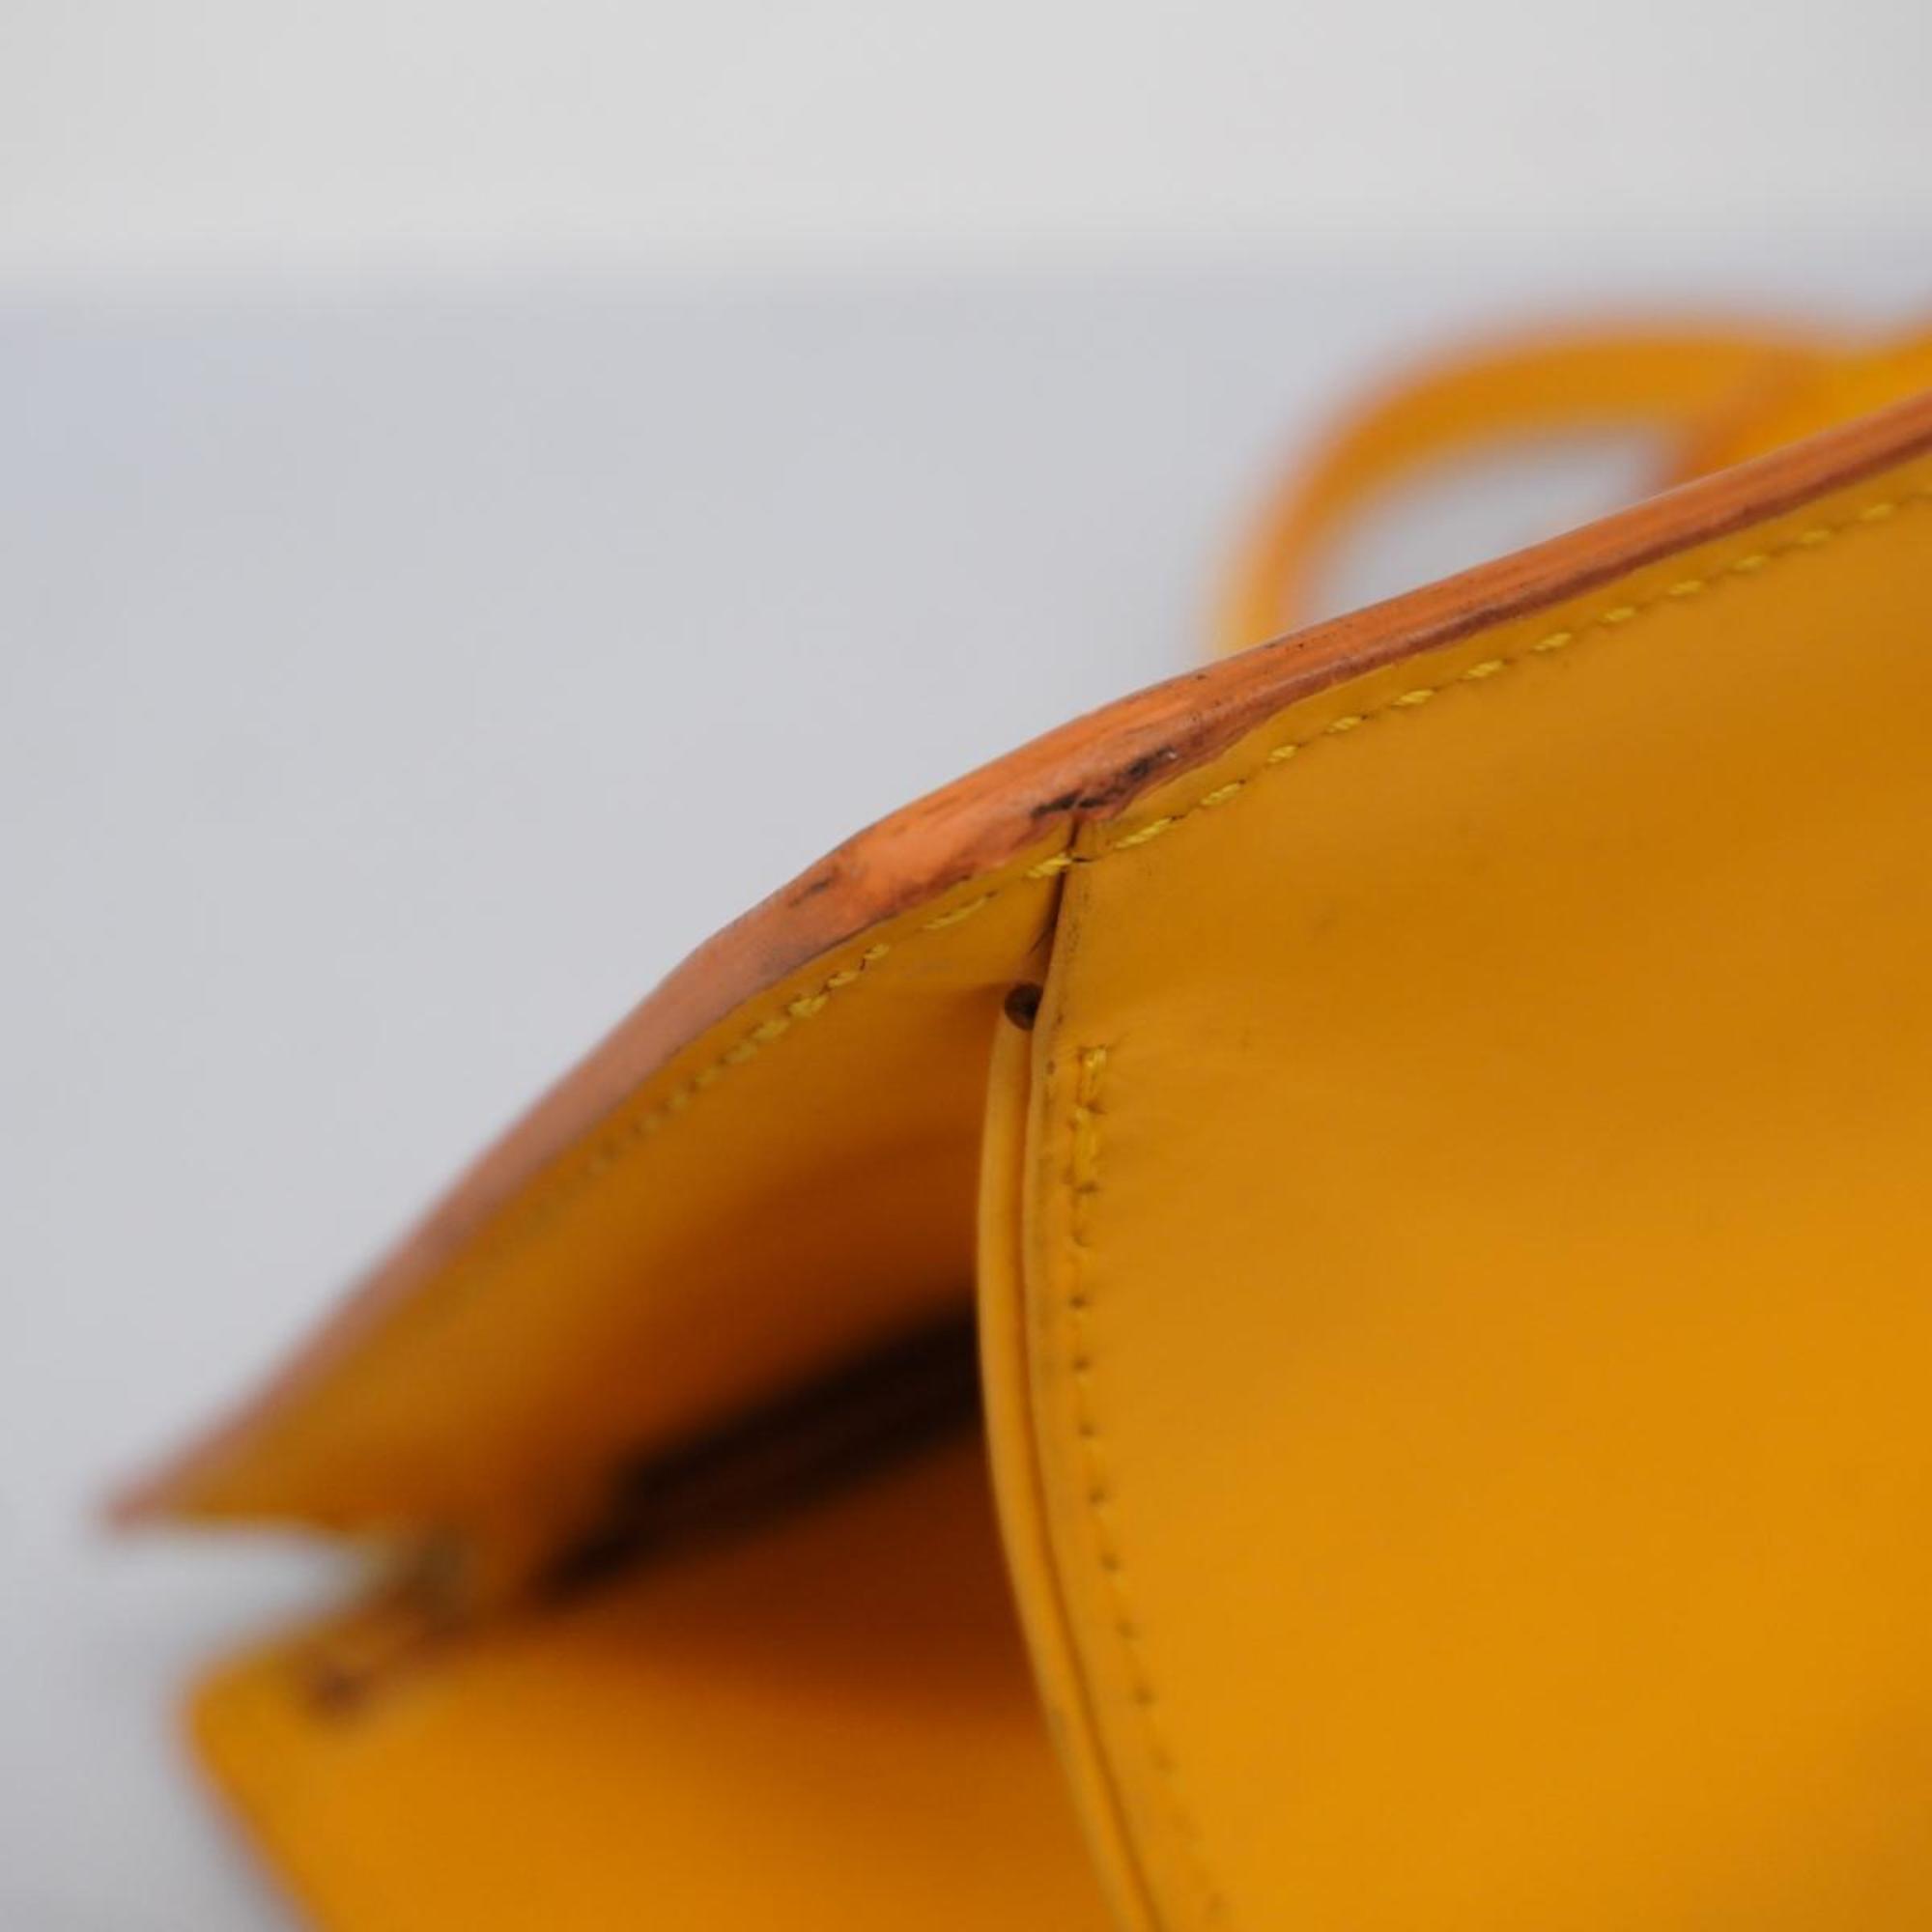 Louis Vuitton Epi Sac Triangle Handbag M52099 Jaune Ladies